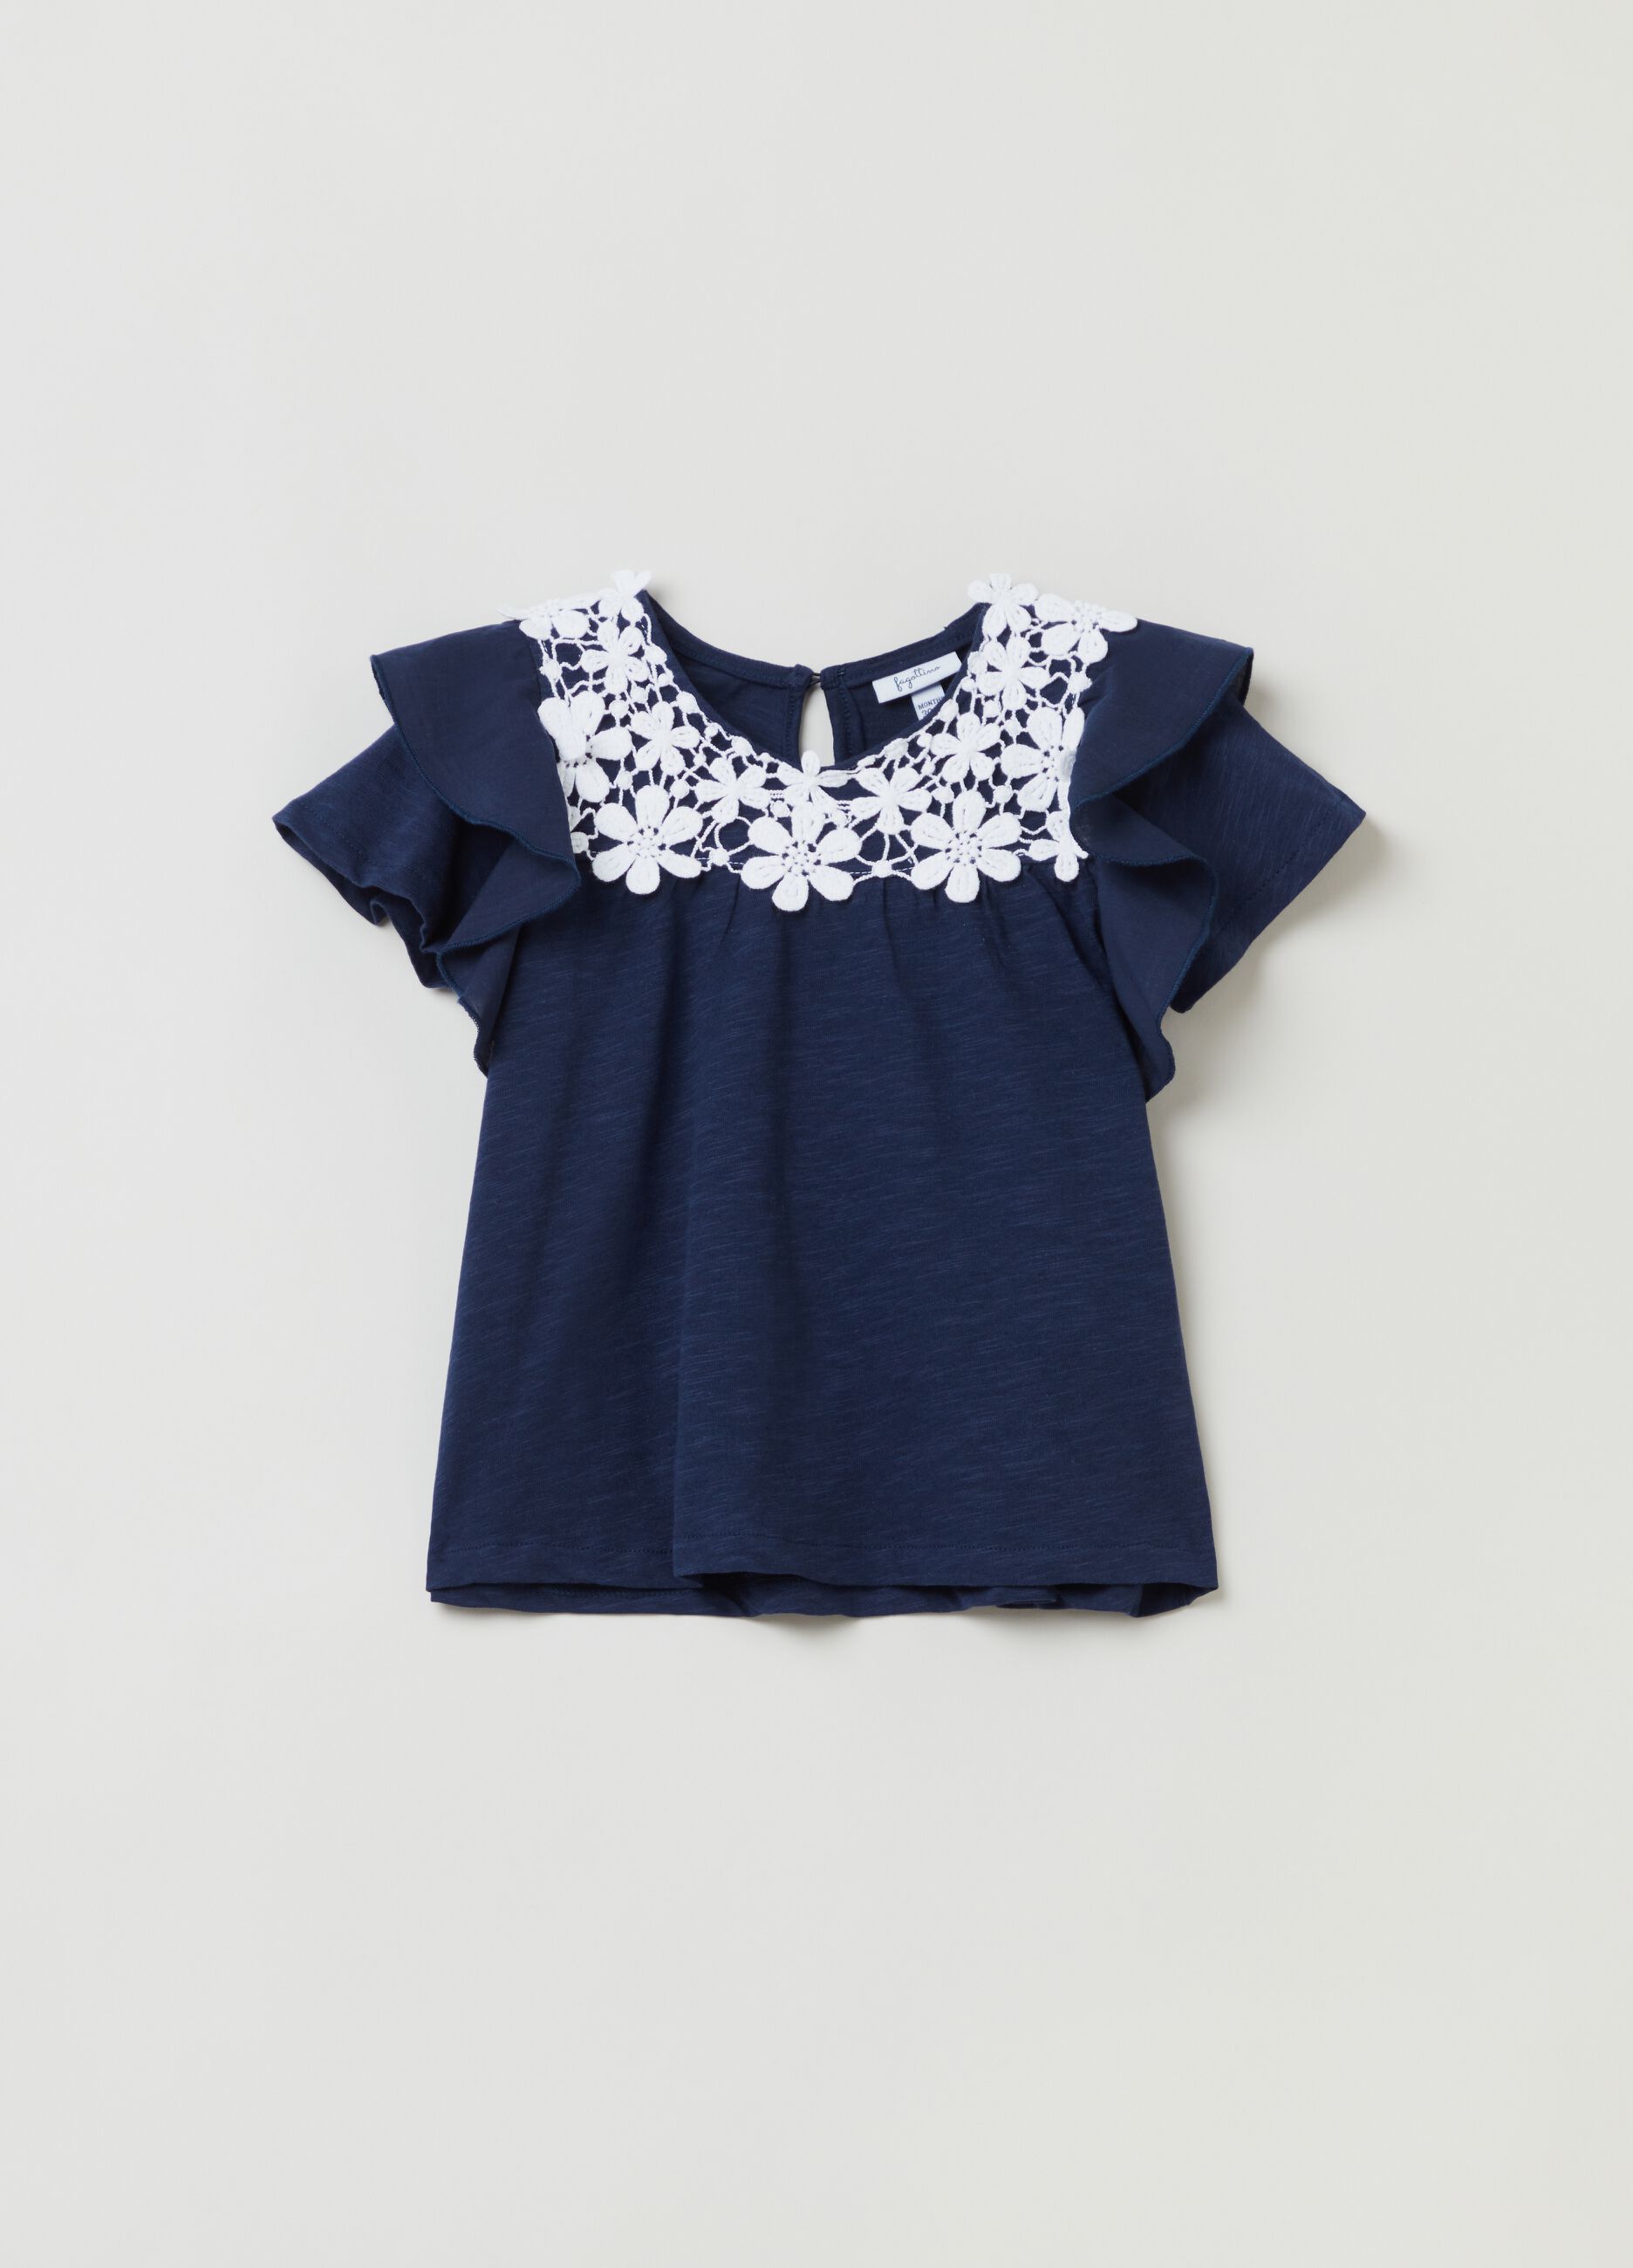 T-shirt con applicazione floreale crochet